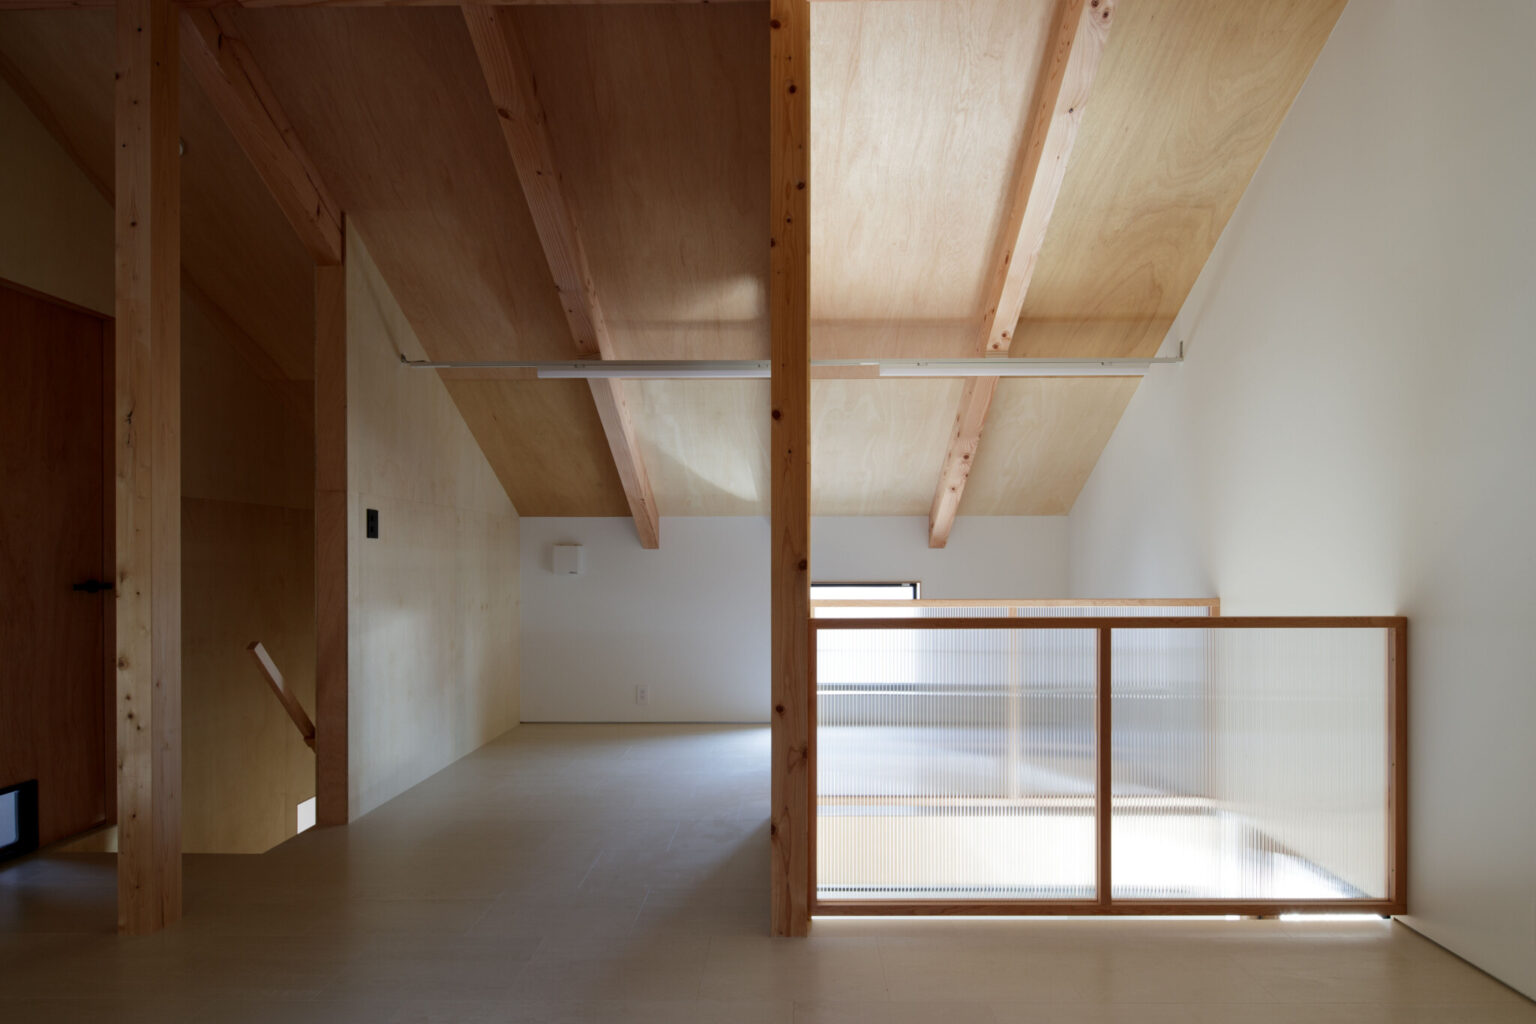 Hut House designed by MOSAIC DESIGN Inc. Ko Nakamura and Sachiyo Hirosawa 住宅 富山 小屋